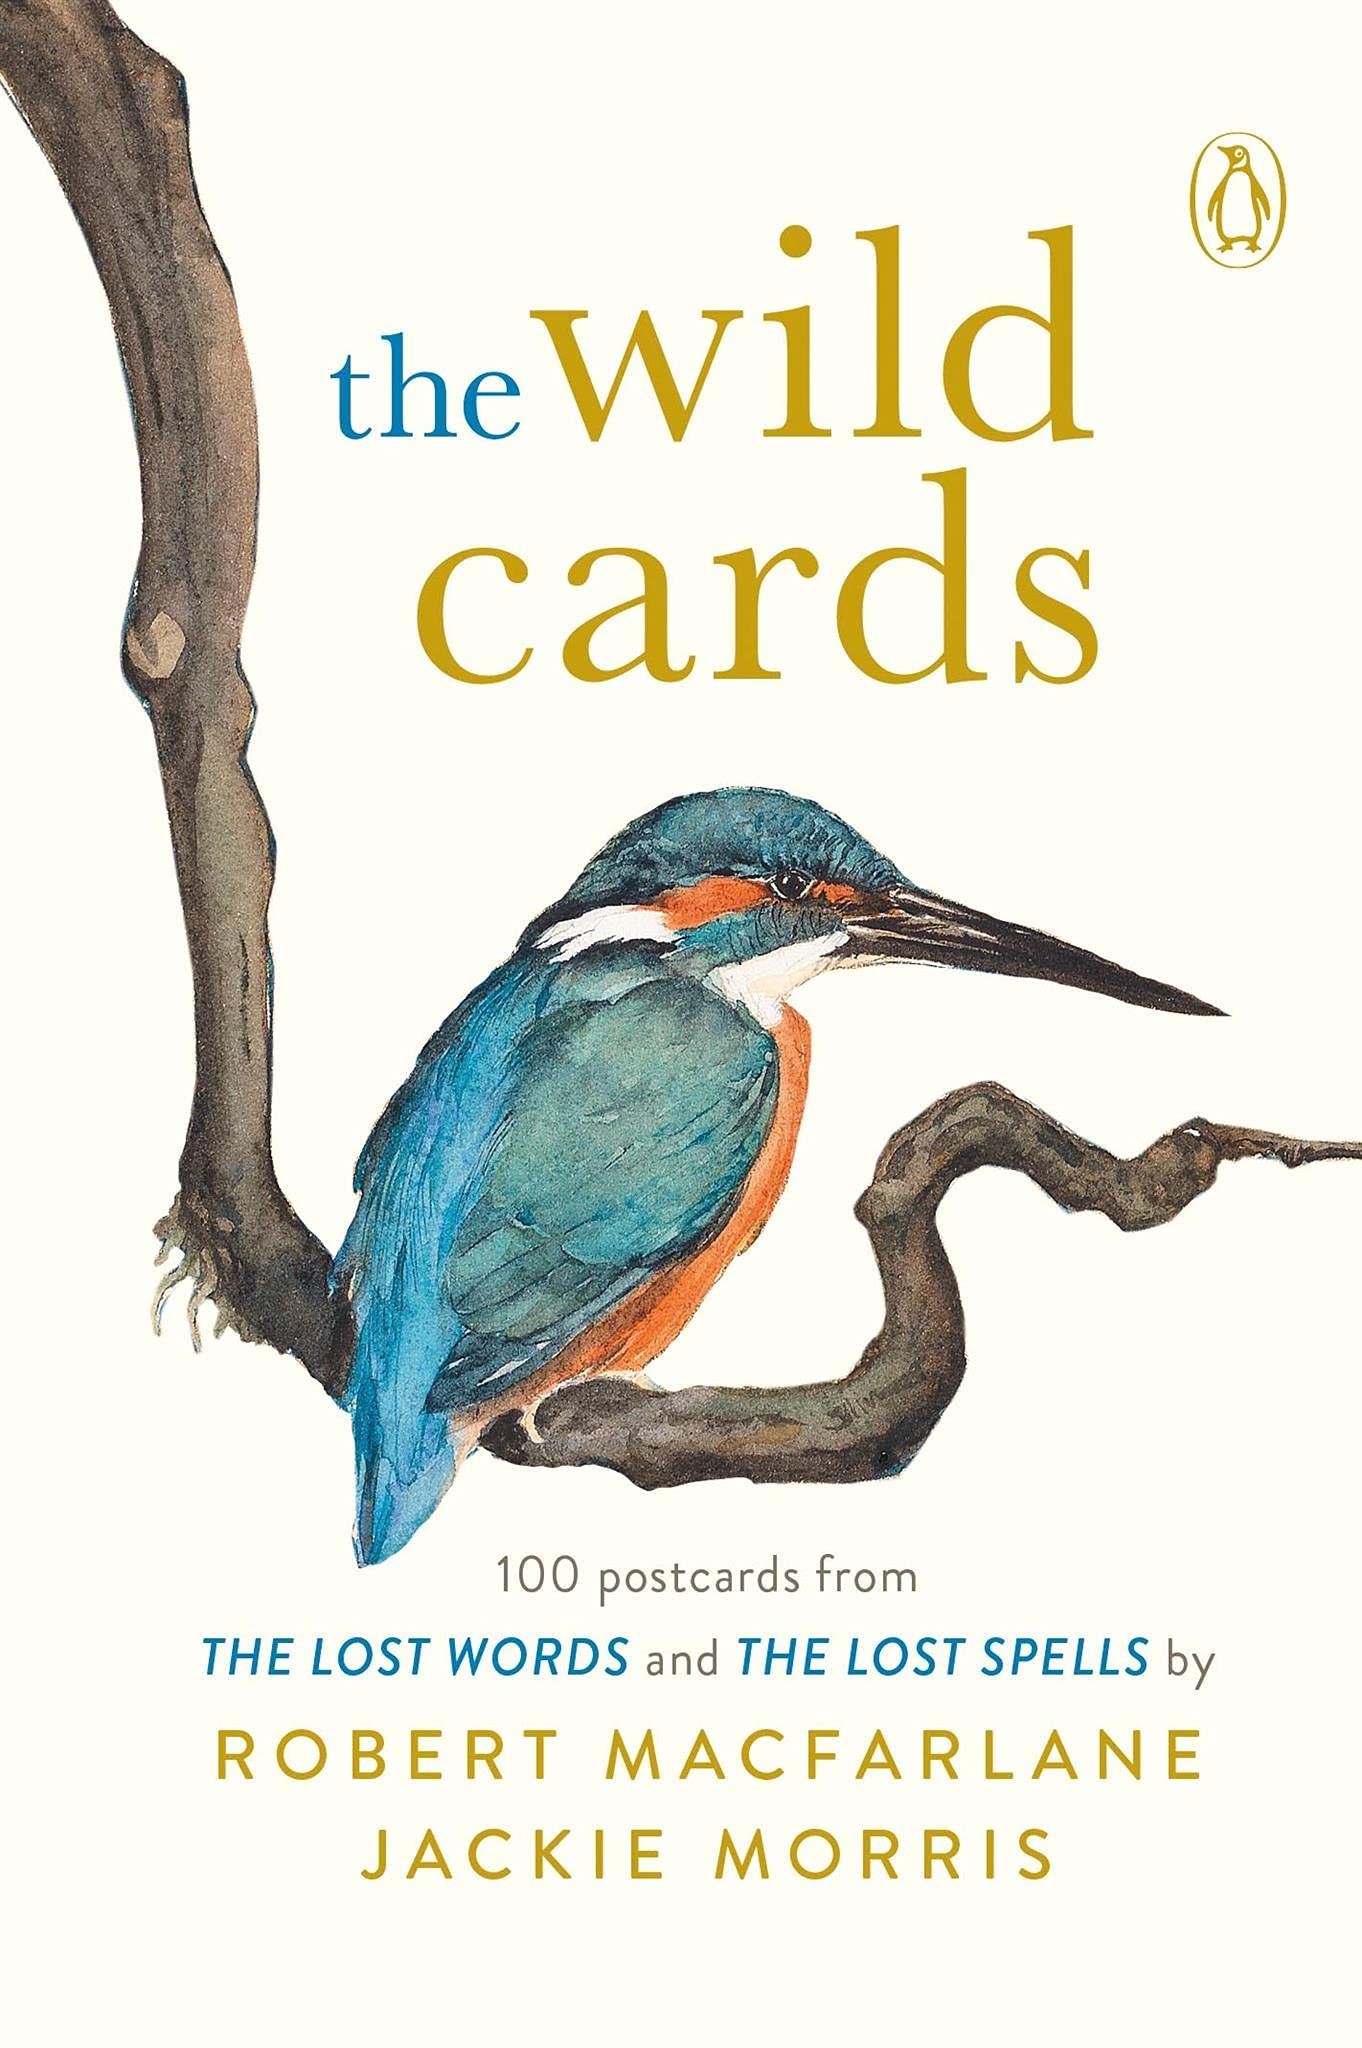 The Wild Cards: A 100 Postcard Box Set